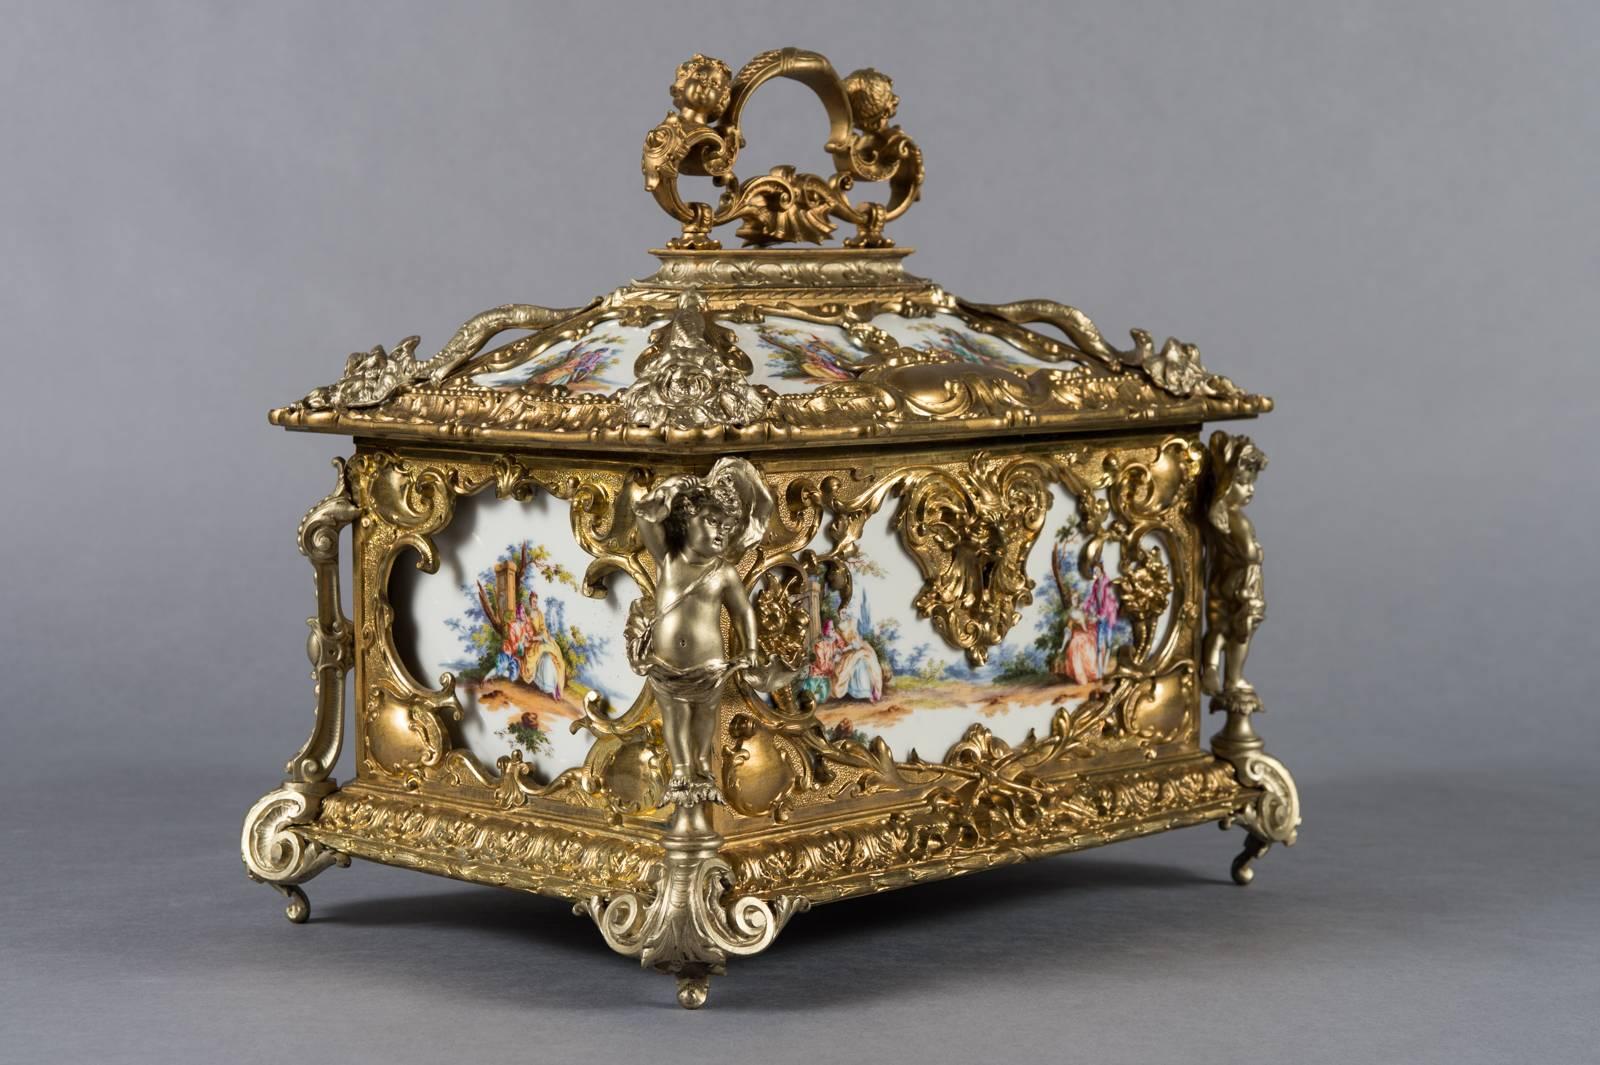 Large German Gilt and Silvered bronze Painted Porcelain Jewel Box/Casket 1